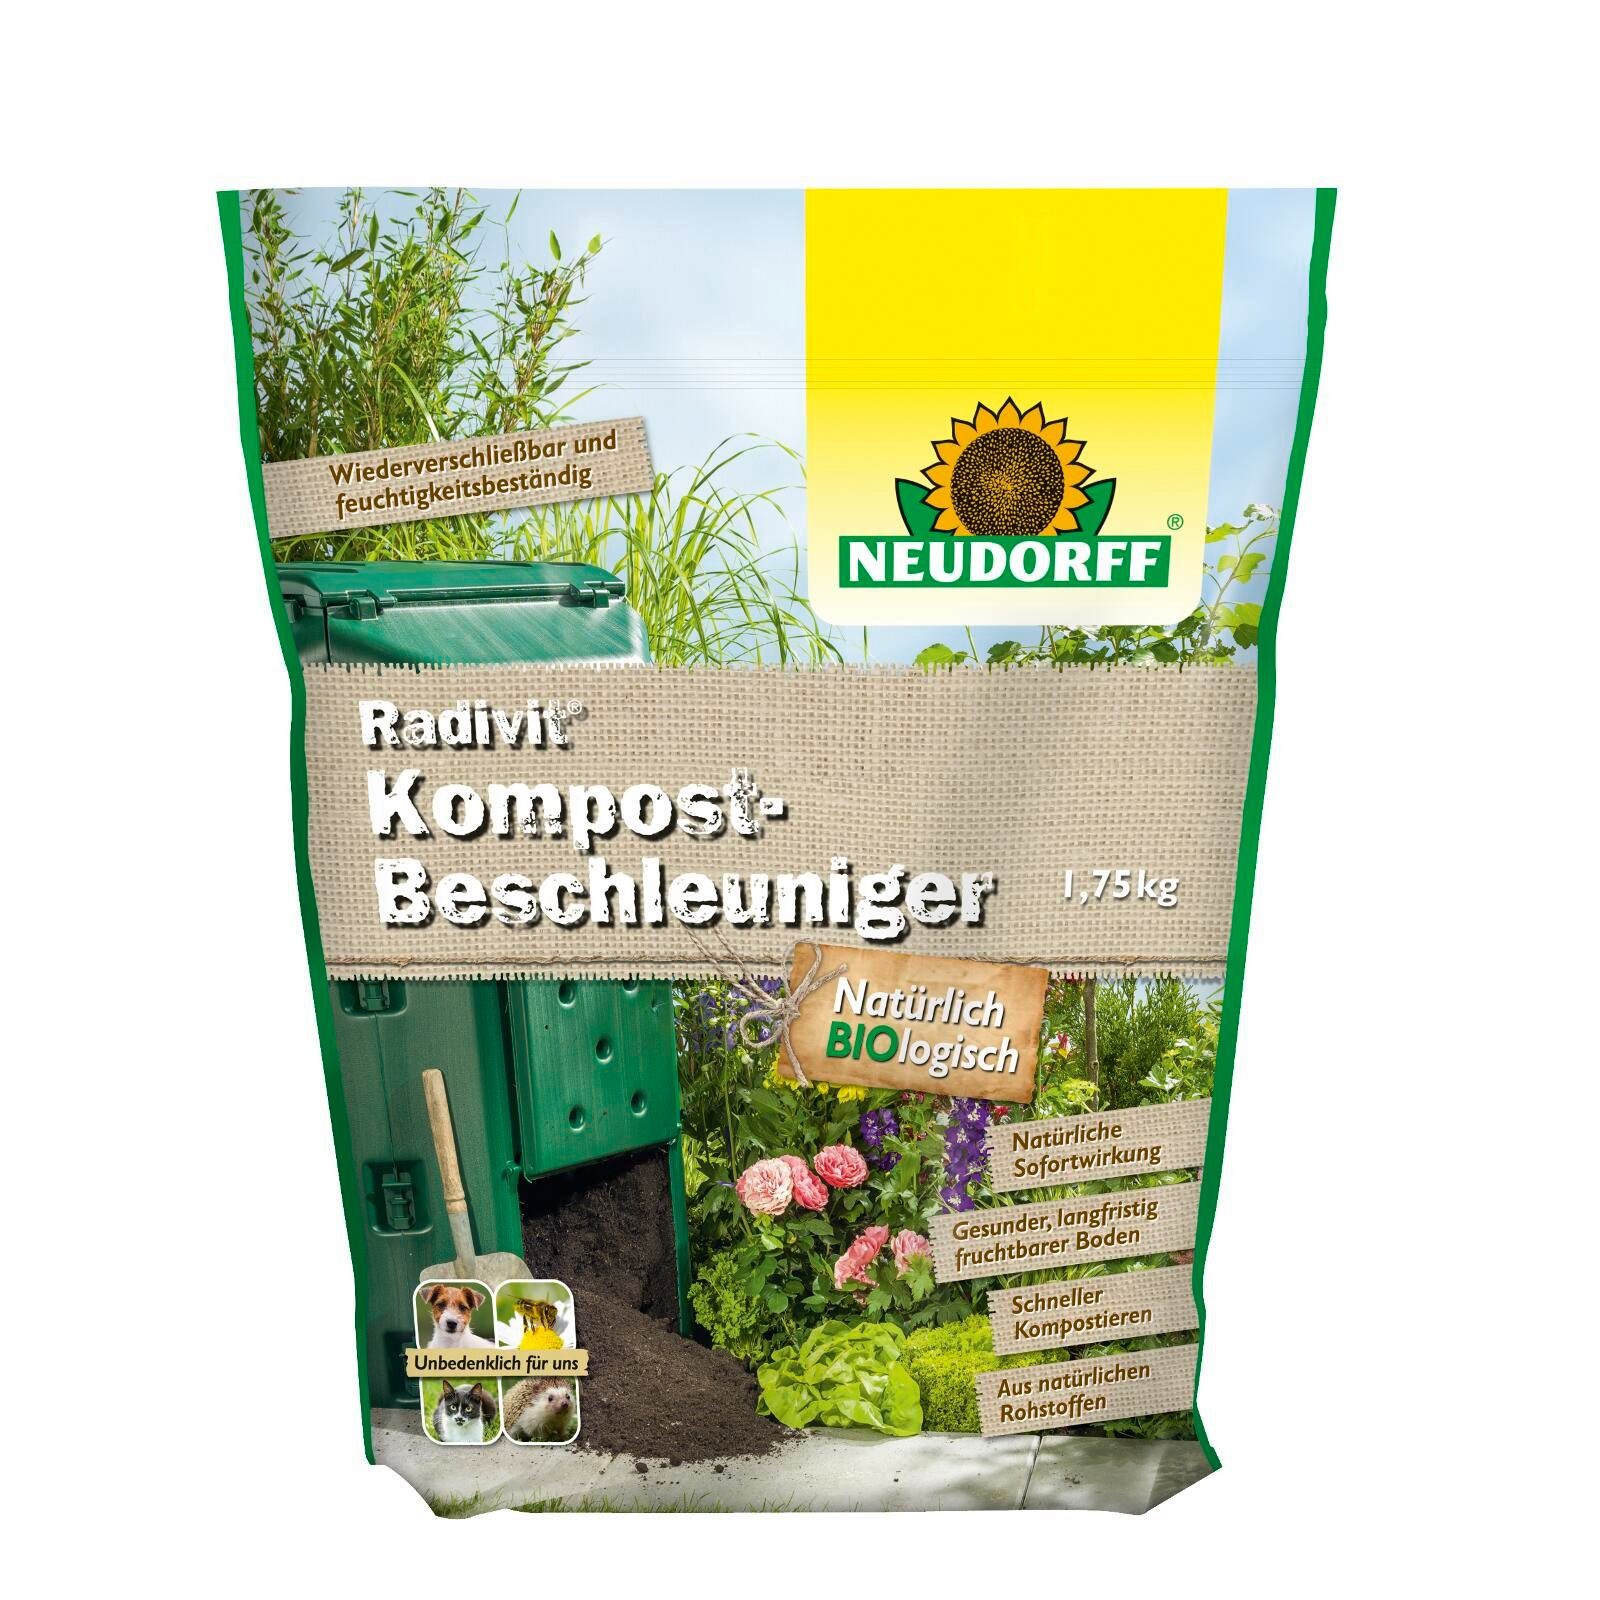 Neudorff Thermokomposter Neudorff - Radivit kg Kompost-Beschleuniger 1,75